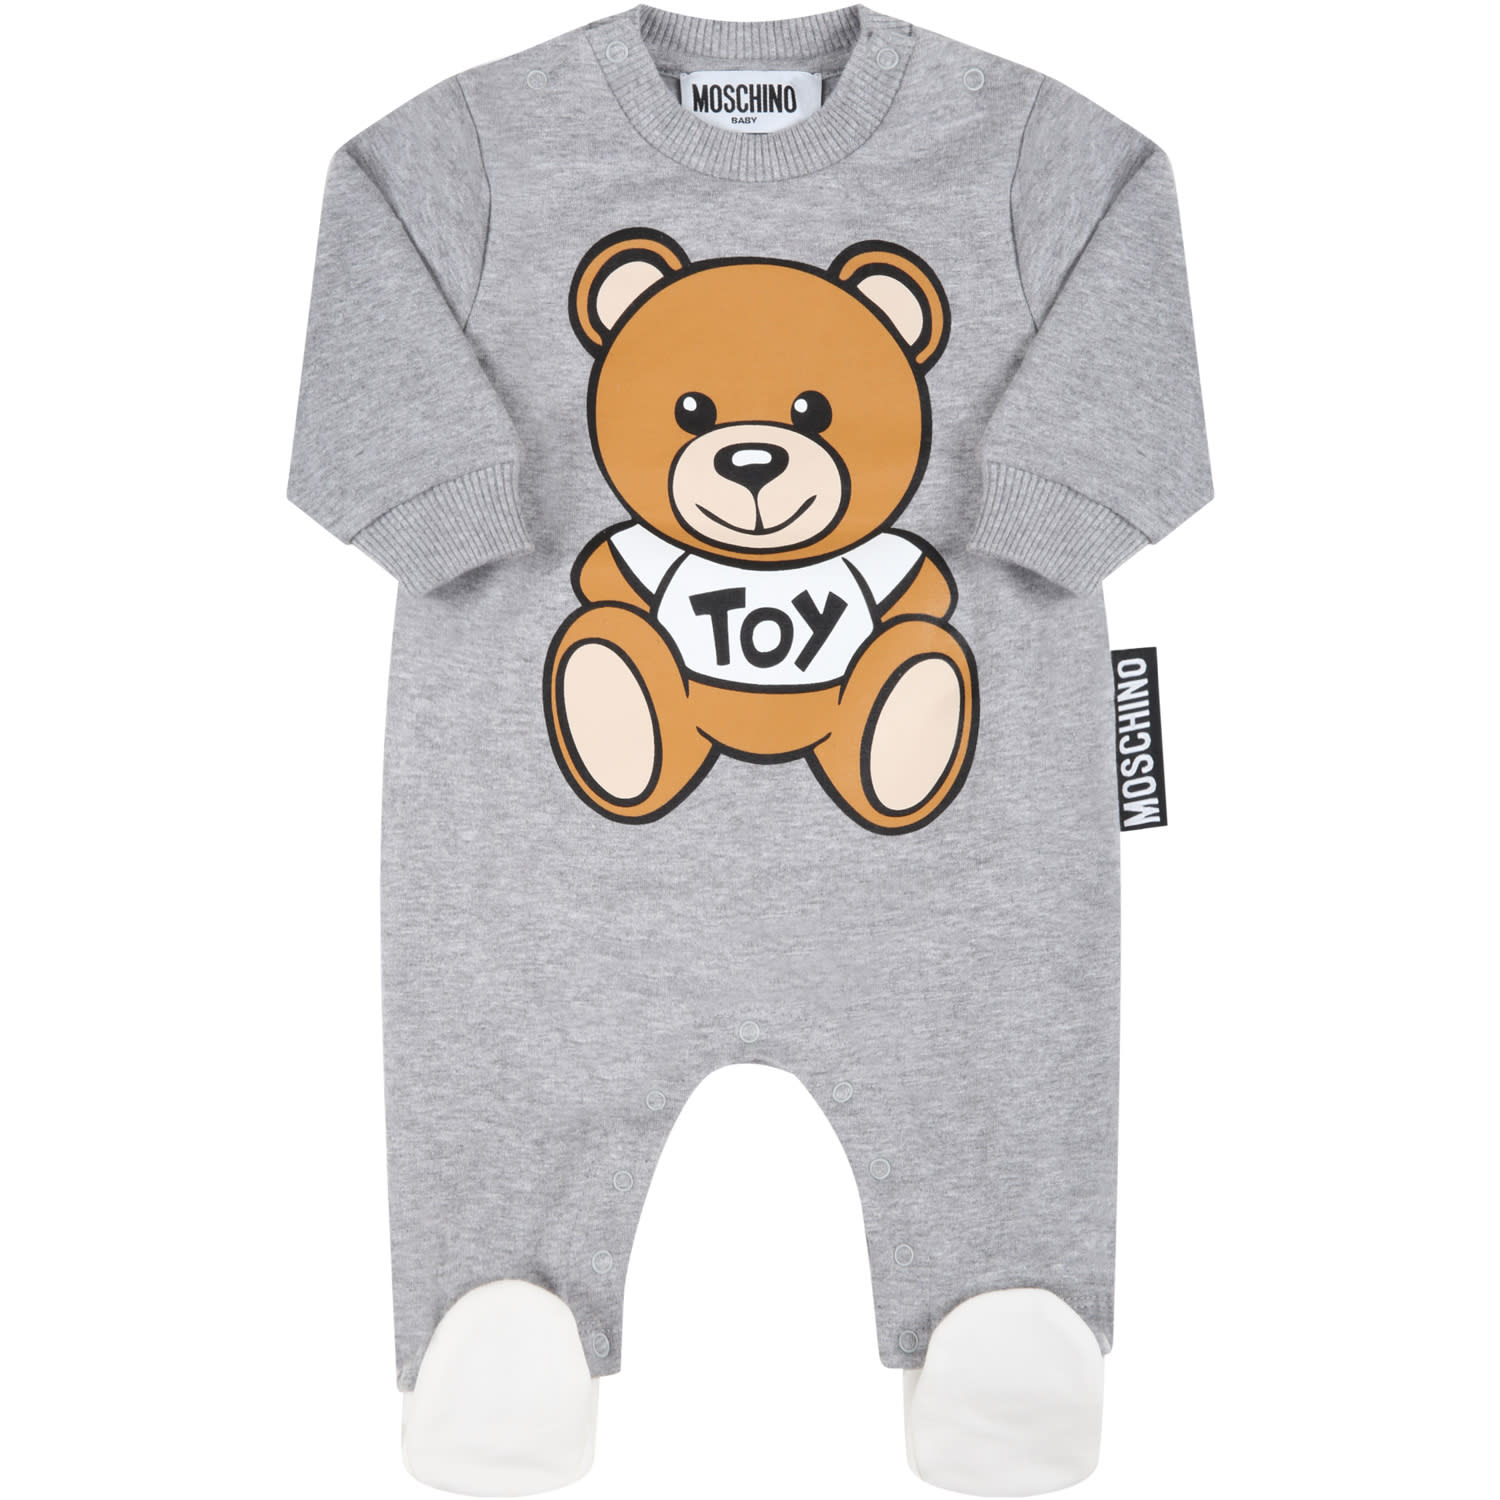 Moschino Grey Babygrow For Baby Kids With Teddy Bear